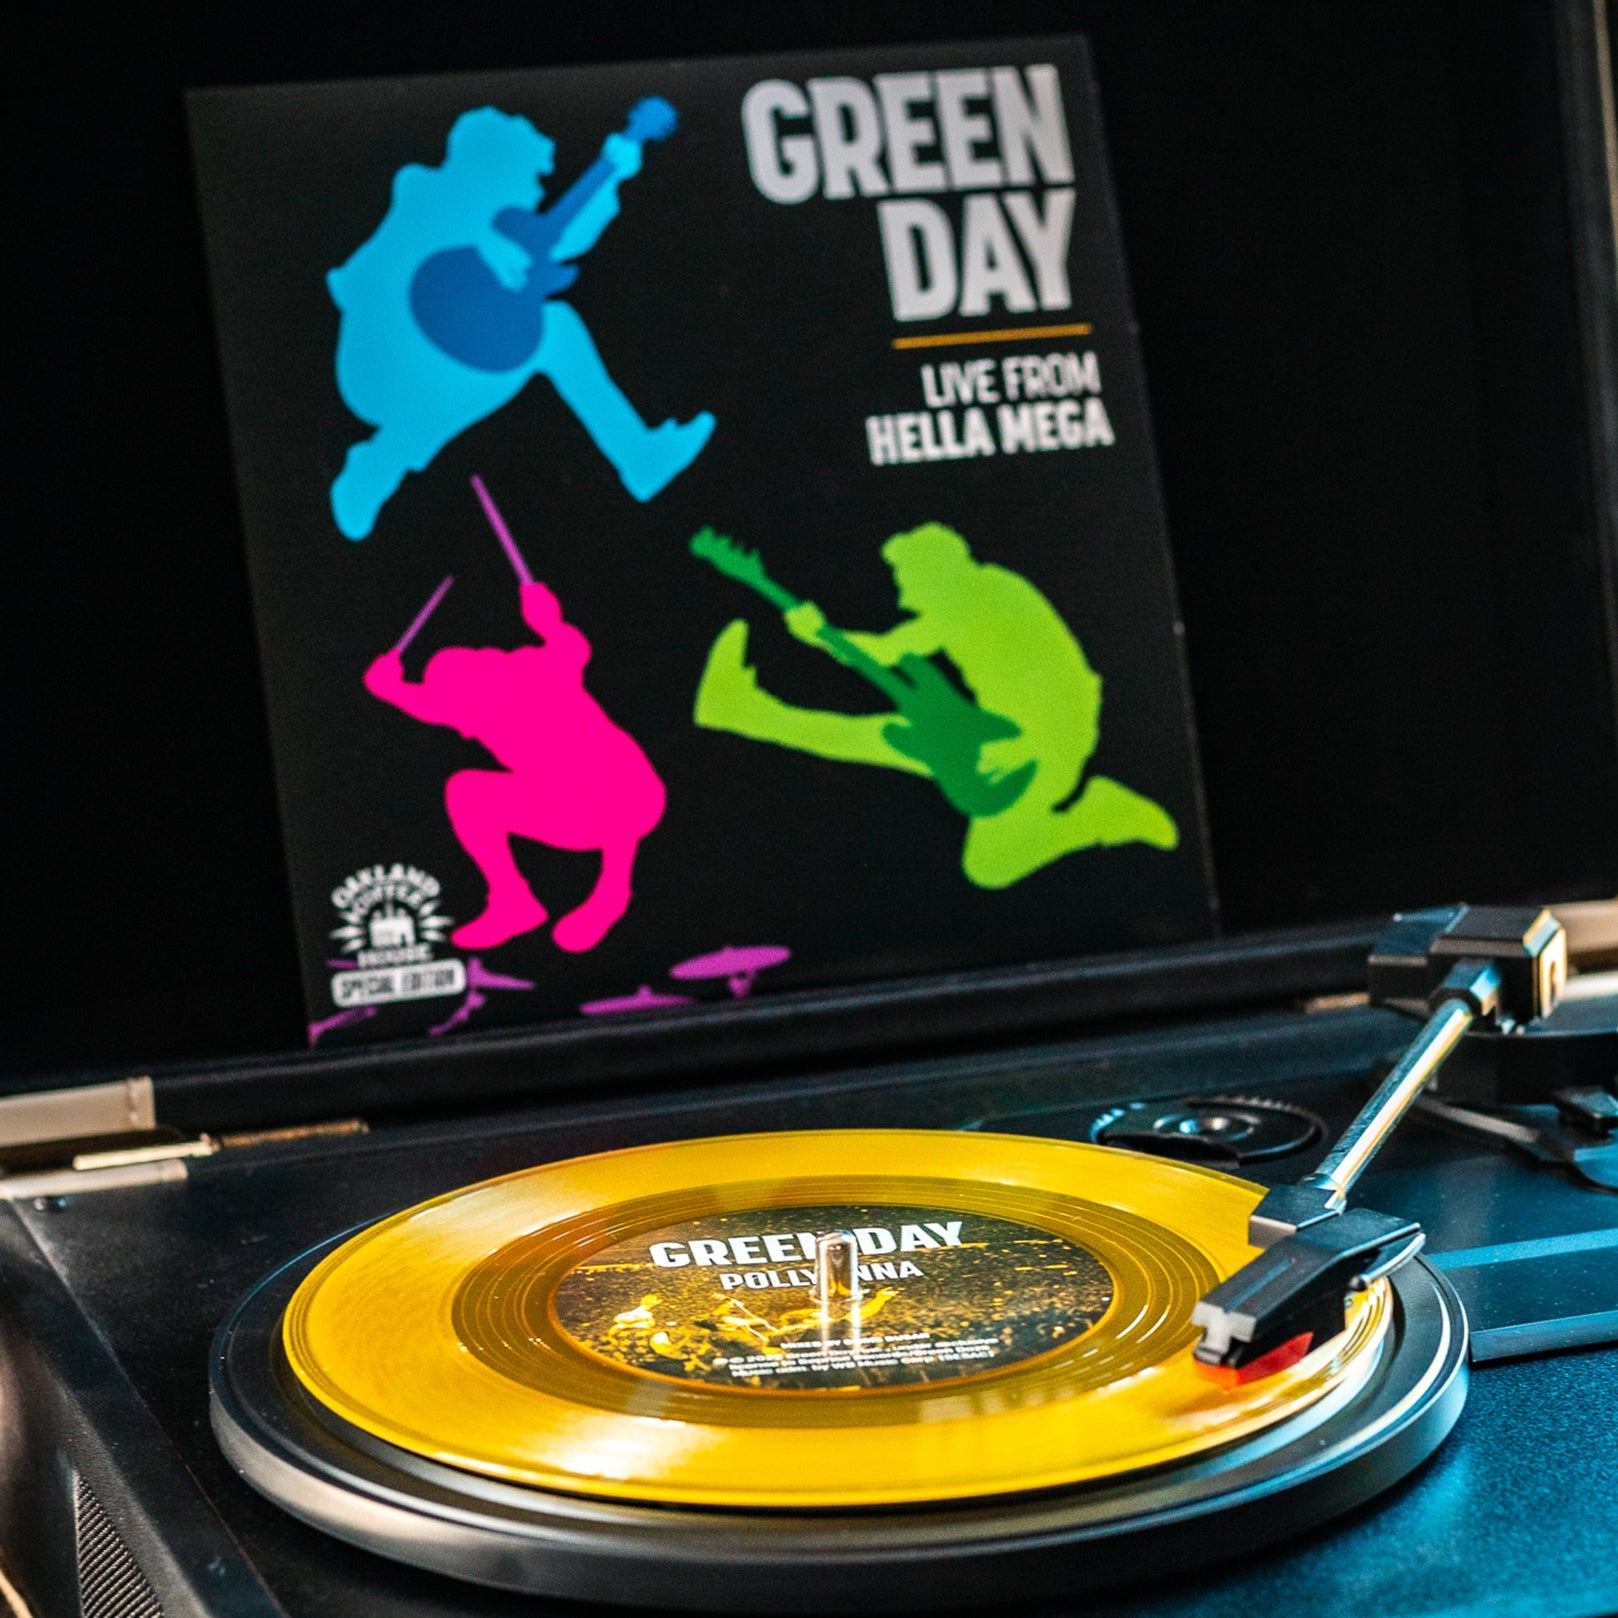 Green Day: Live From Hella Mega Vinyl (Yellow Edition) – Oakland